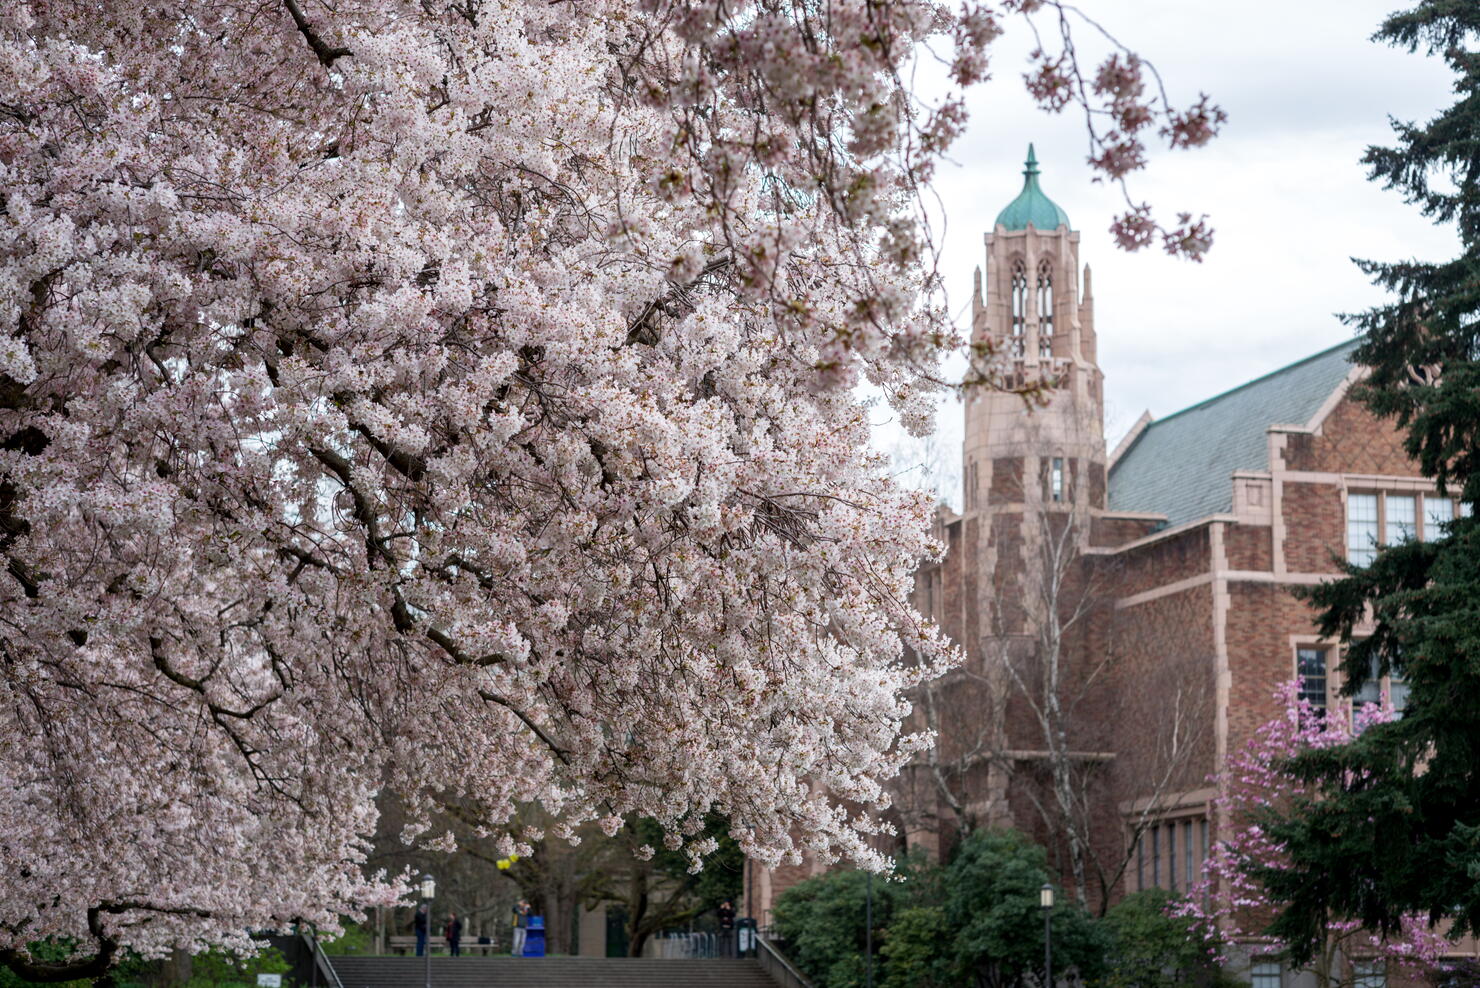 Cherry blossom trees at UW campus